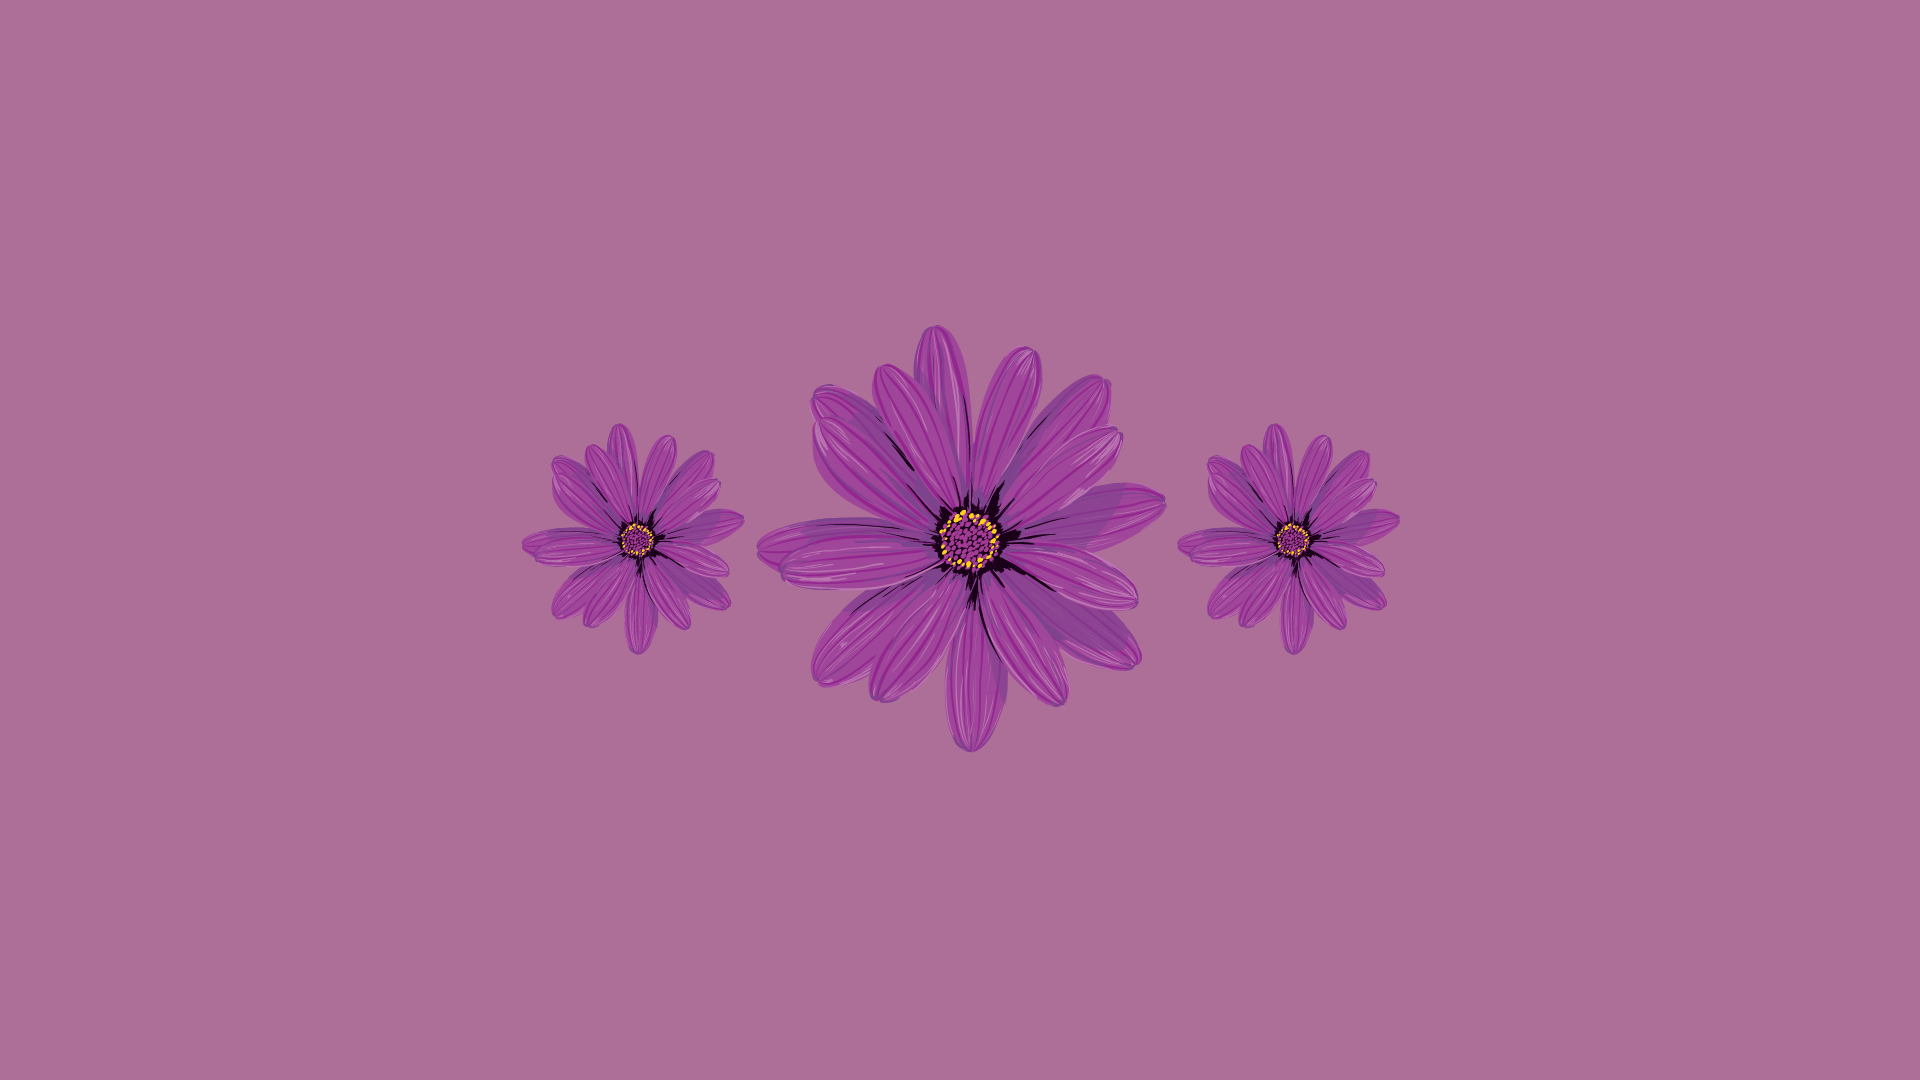 A purple flower with three petals on pink background - Purple, desktop, cute purple, spring, violet, purple quotes